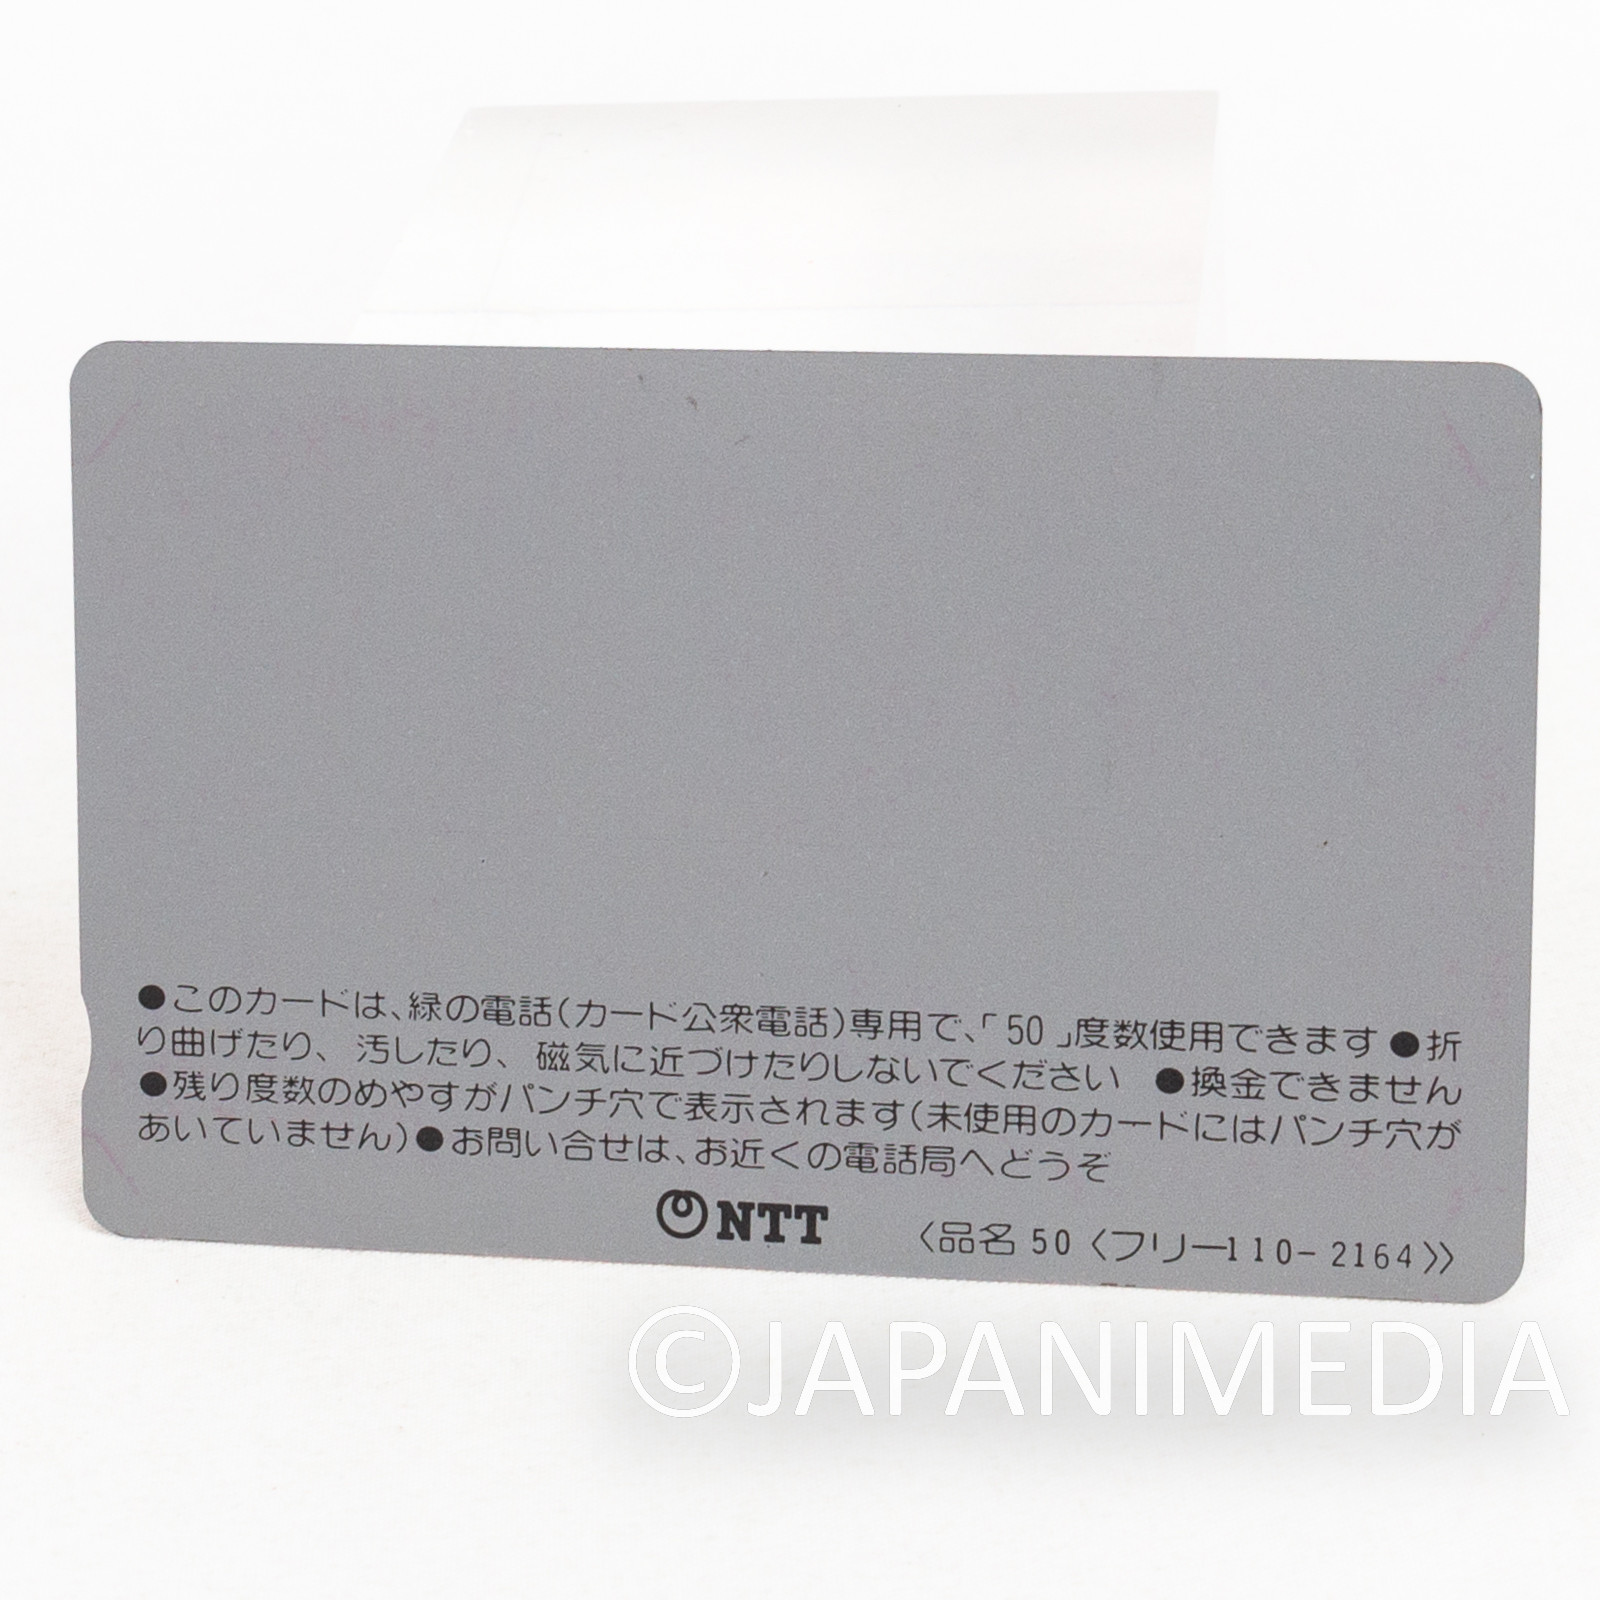 Retro RARE Fire Tripper Telephone Card & Card Case Holder RUMIKO TAKAHASHI